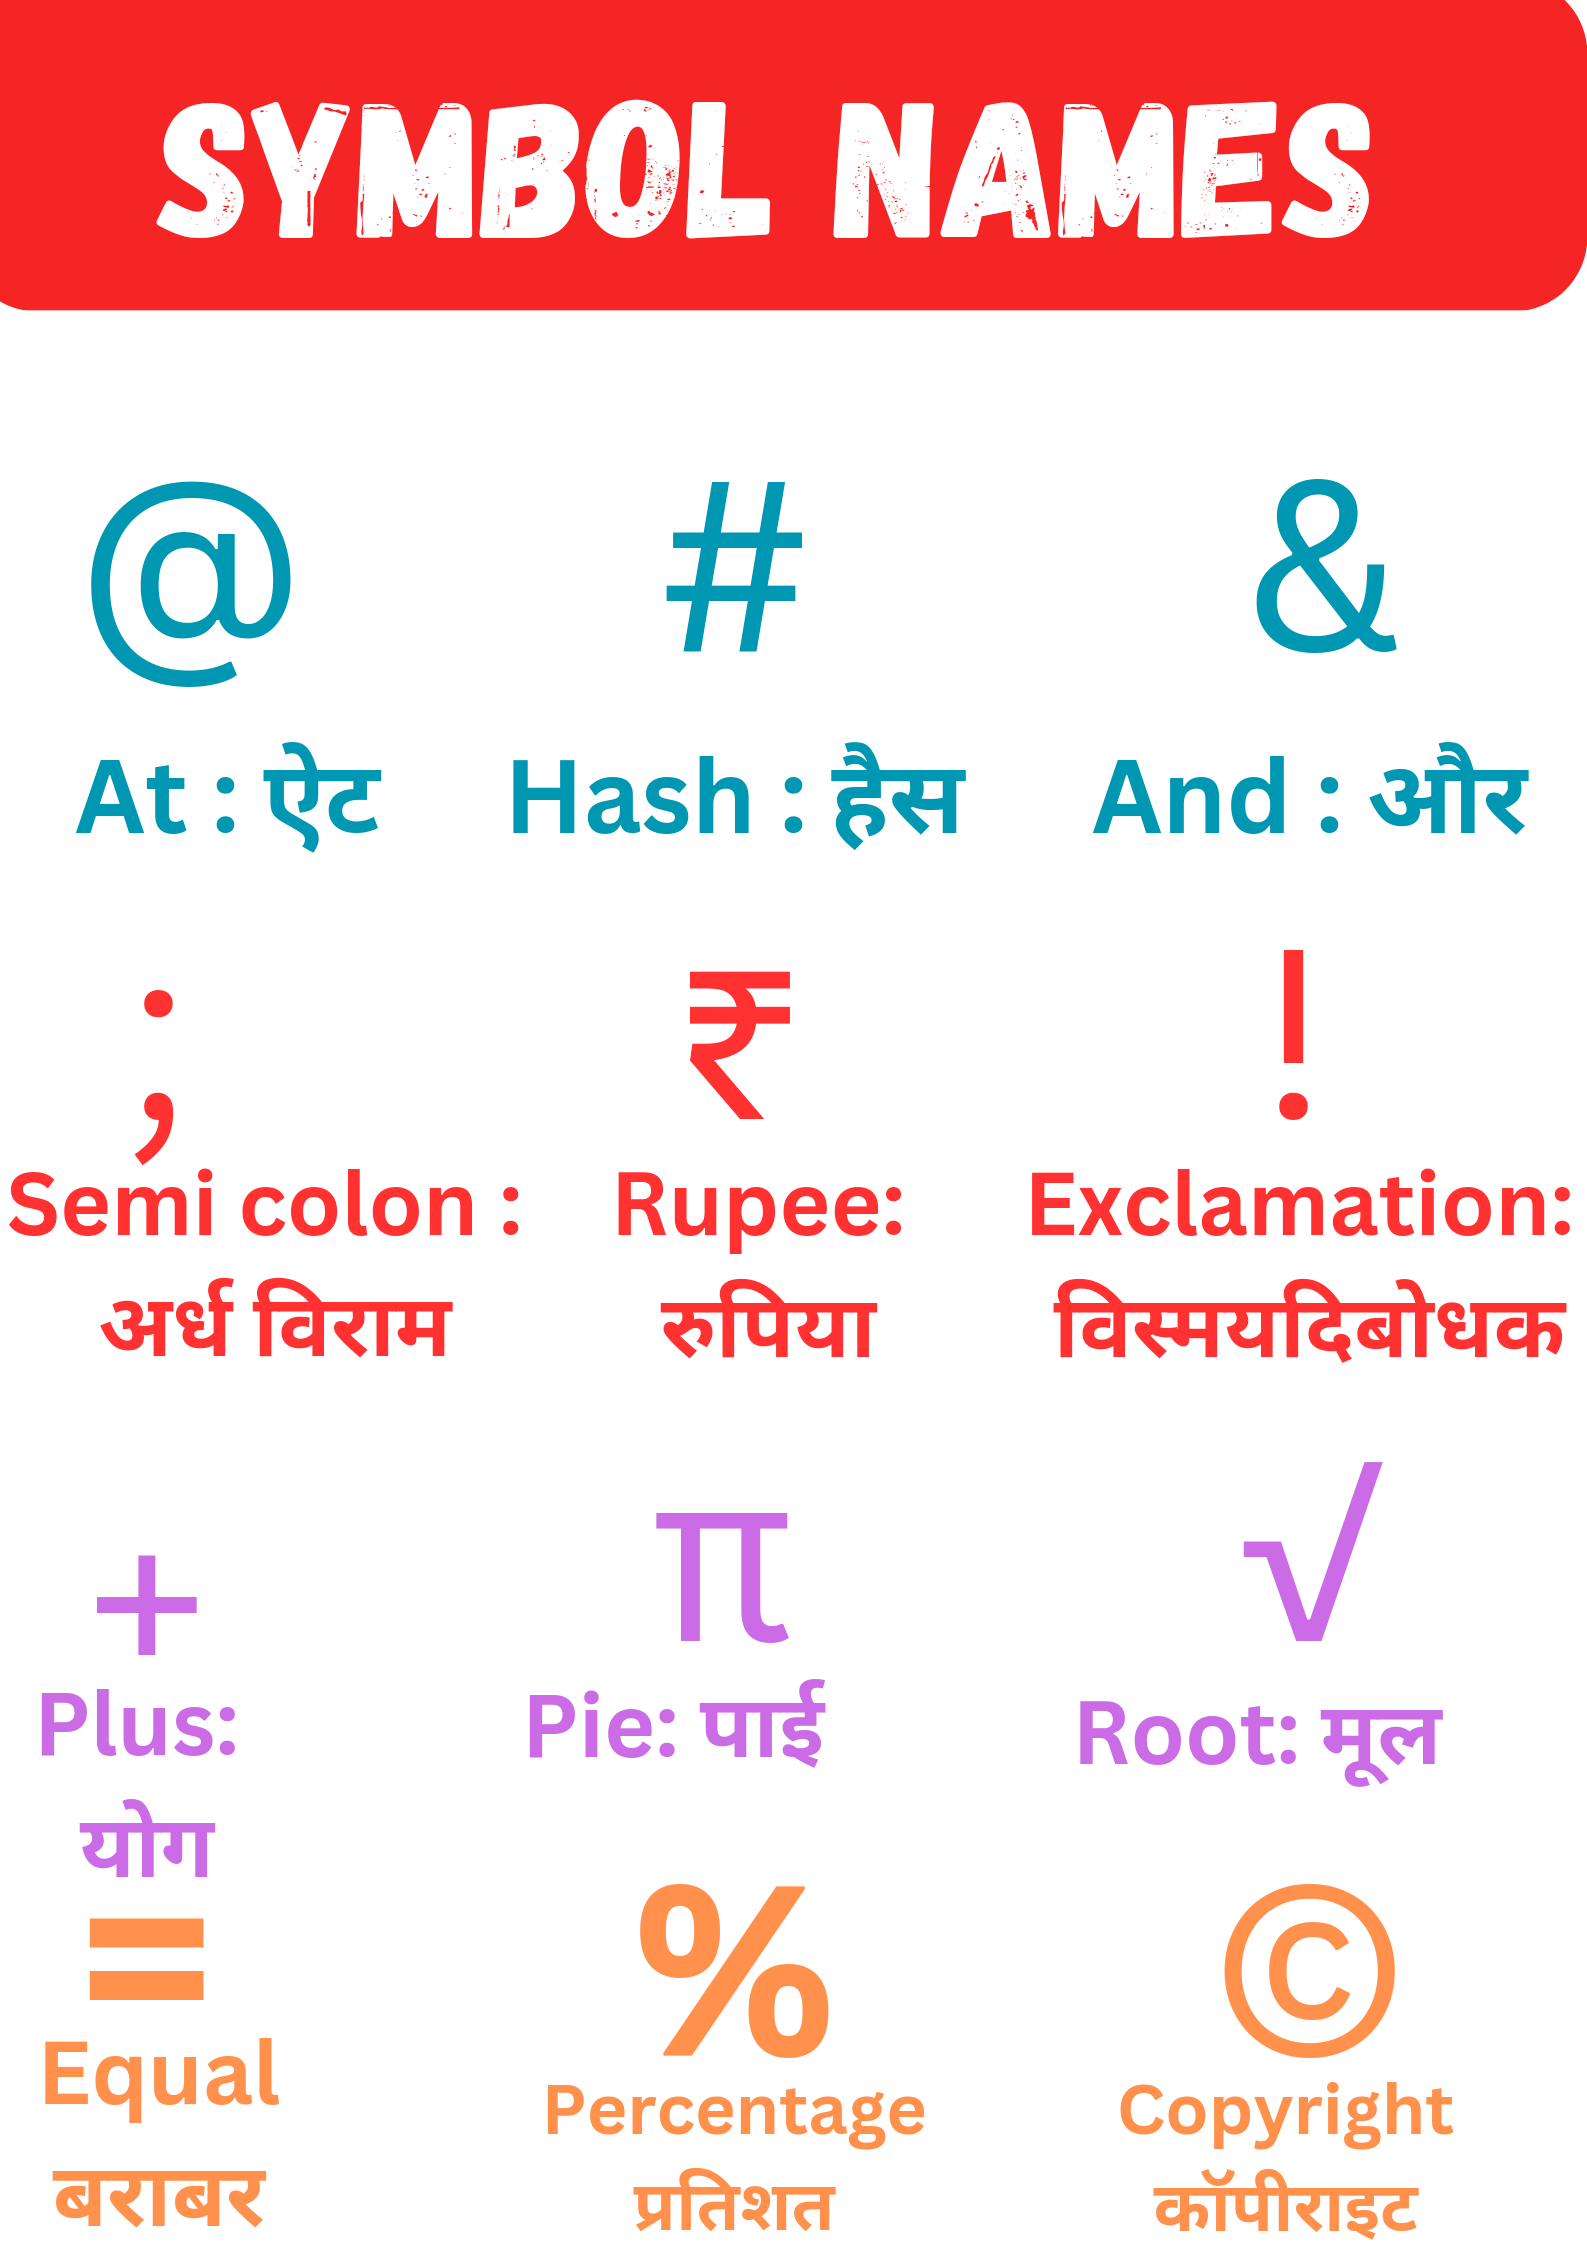 Symbol name list in hindi and English : सभी चिन्हों के नाम ( @, #, & )